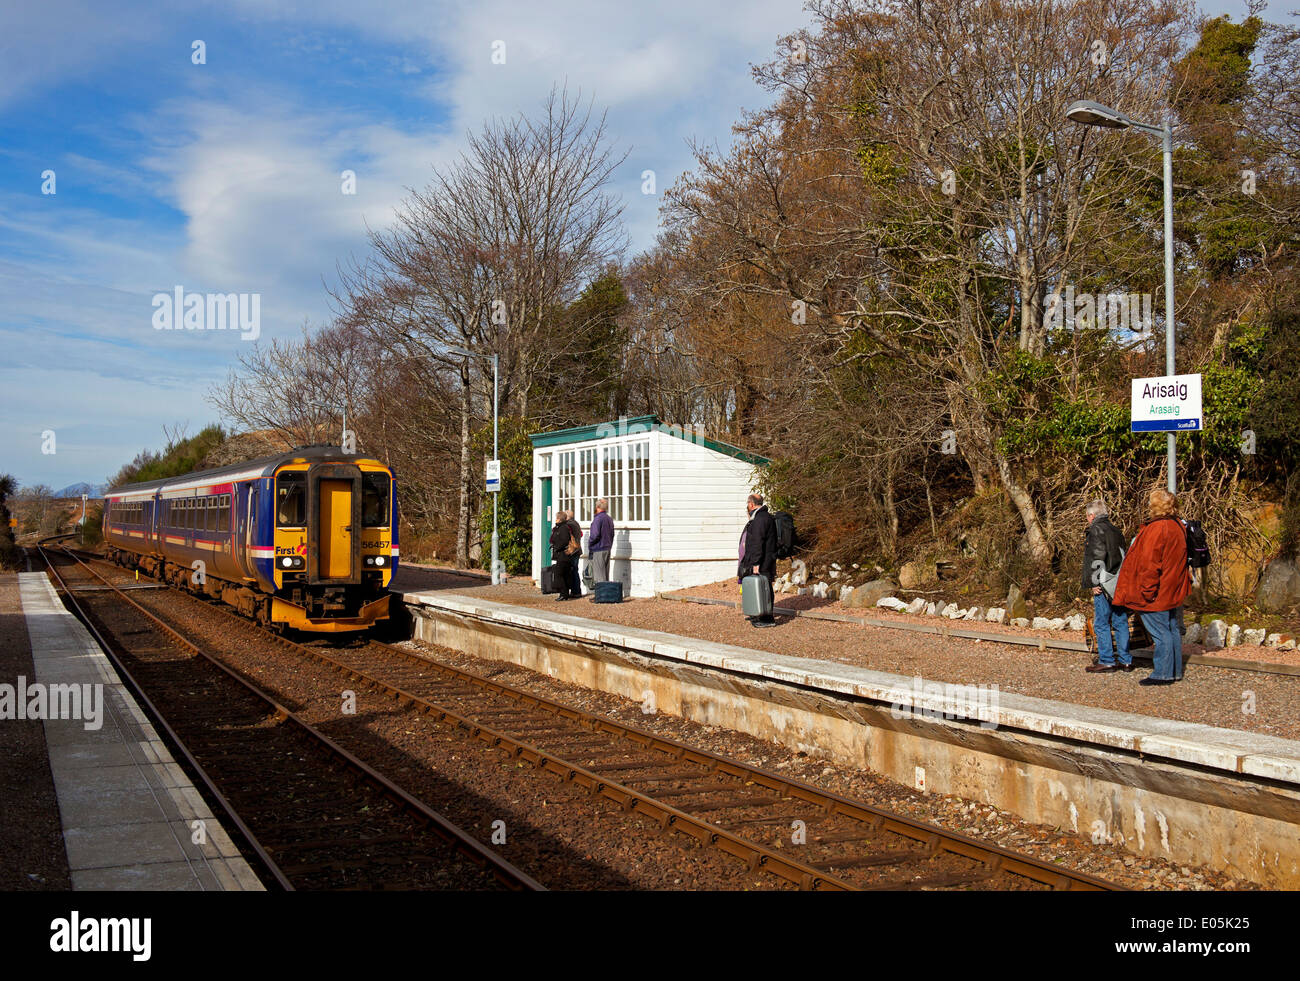 Arisaig stazione ferroviaria, West Highland Line, Lochaber in Scozia Foto Stock